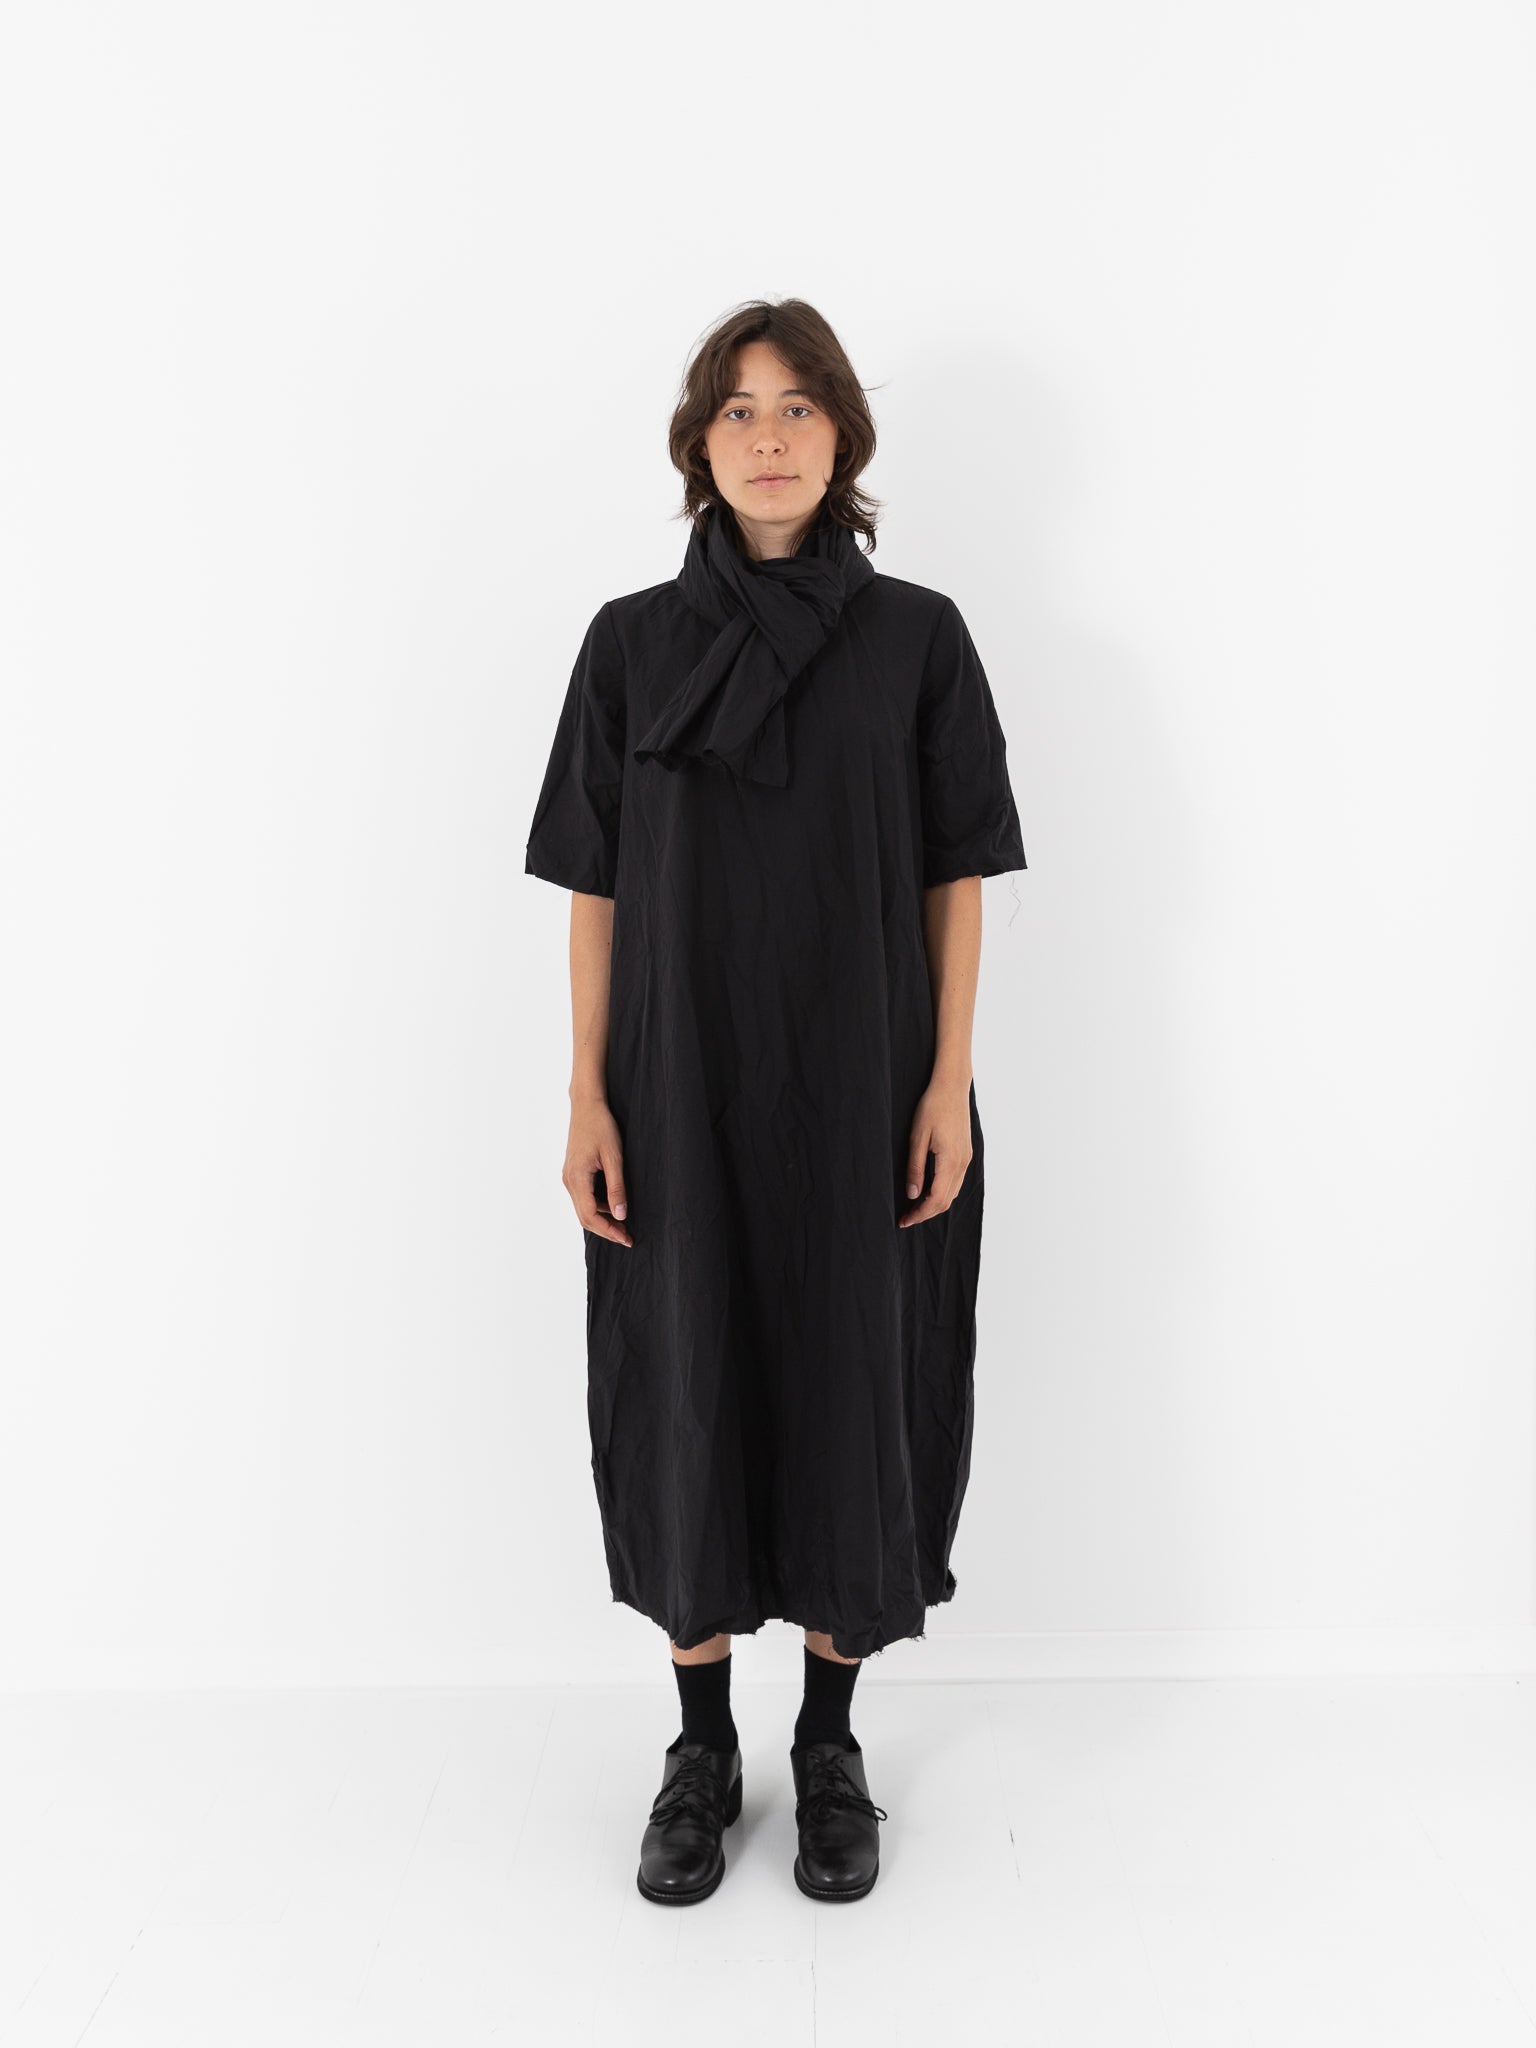 SCHA Half Sleeve Dress, Black - Worthwhile, Inc.